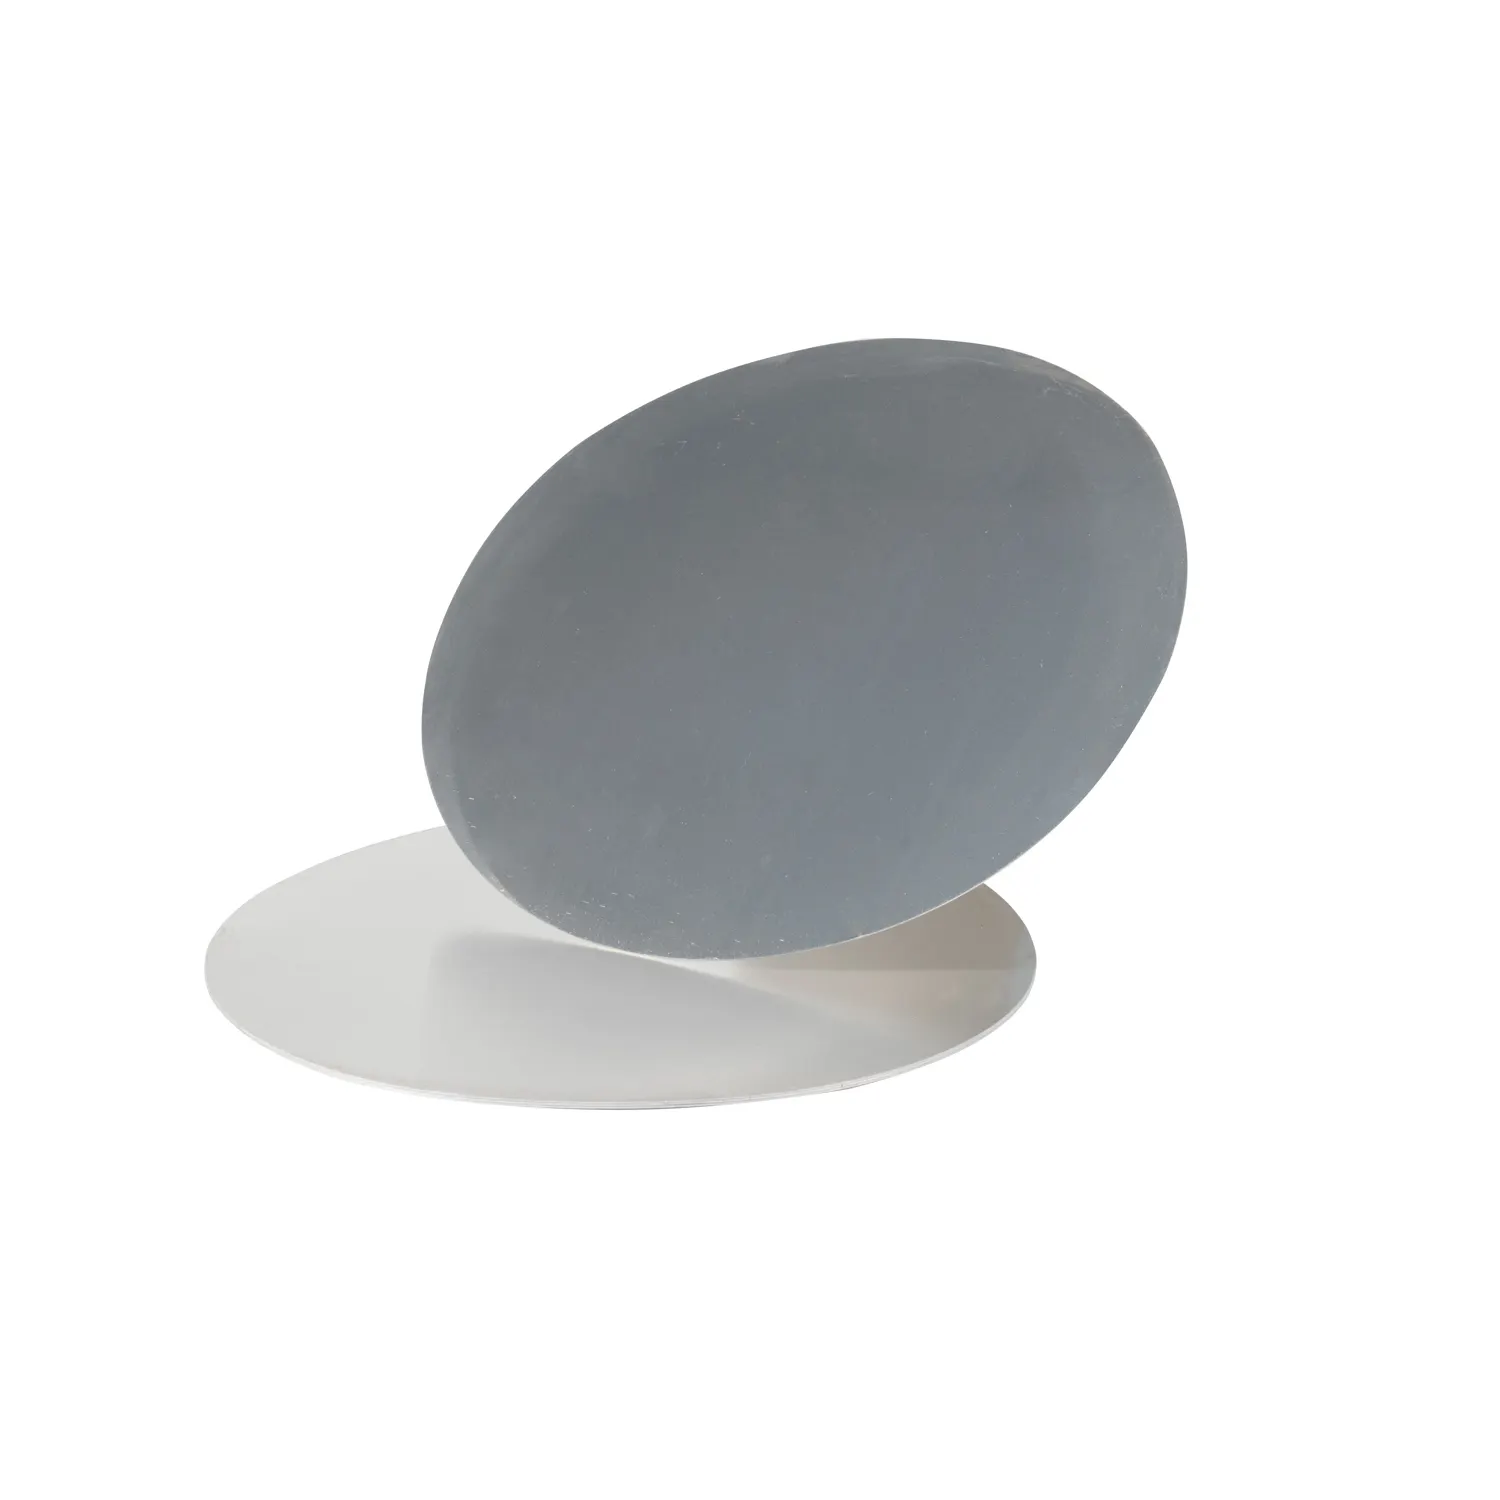 Marco de 6063 hojas, perfil de placa redonda, disco circular de aluminio